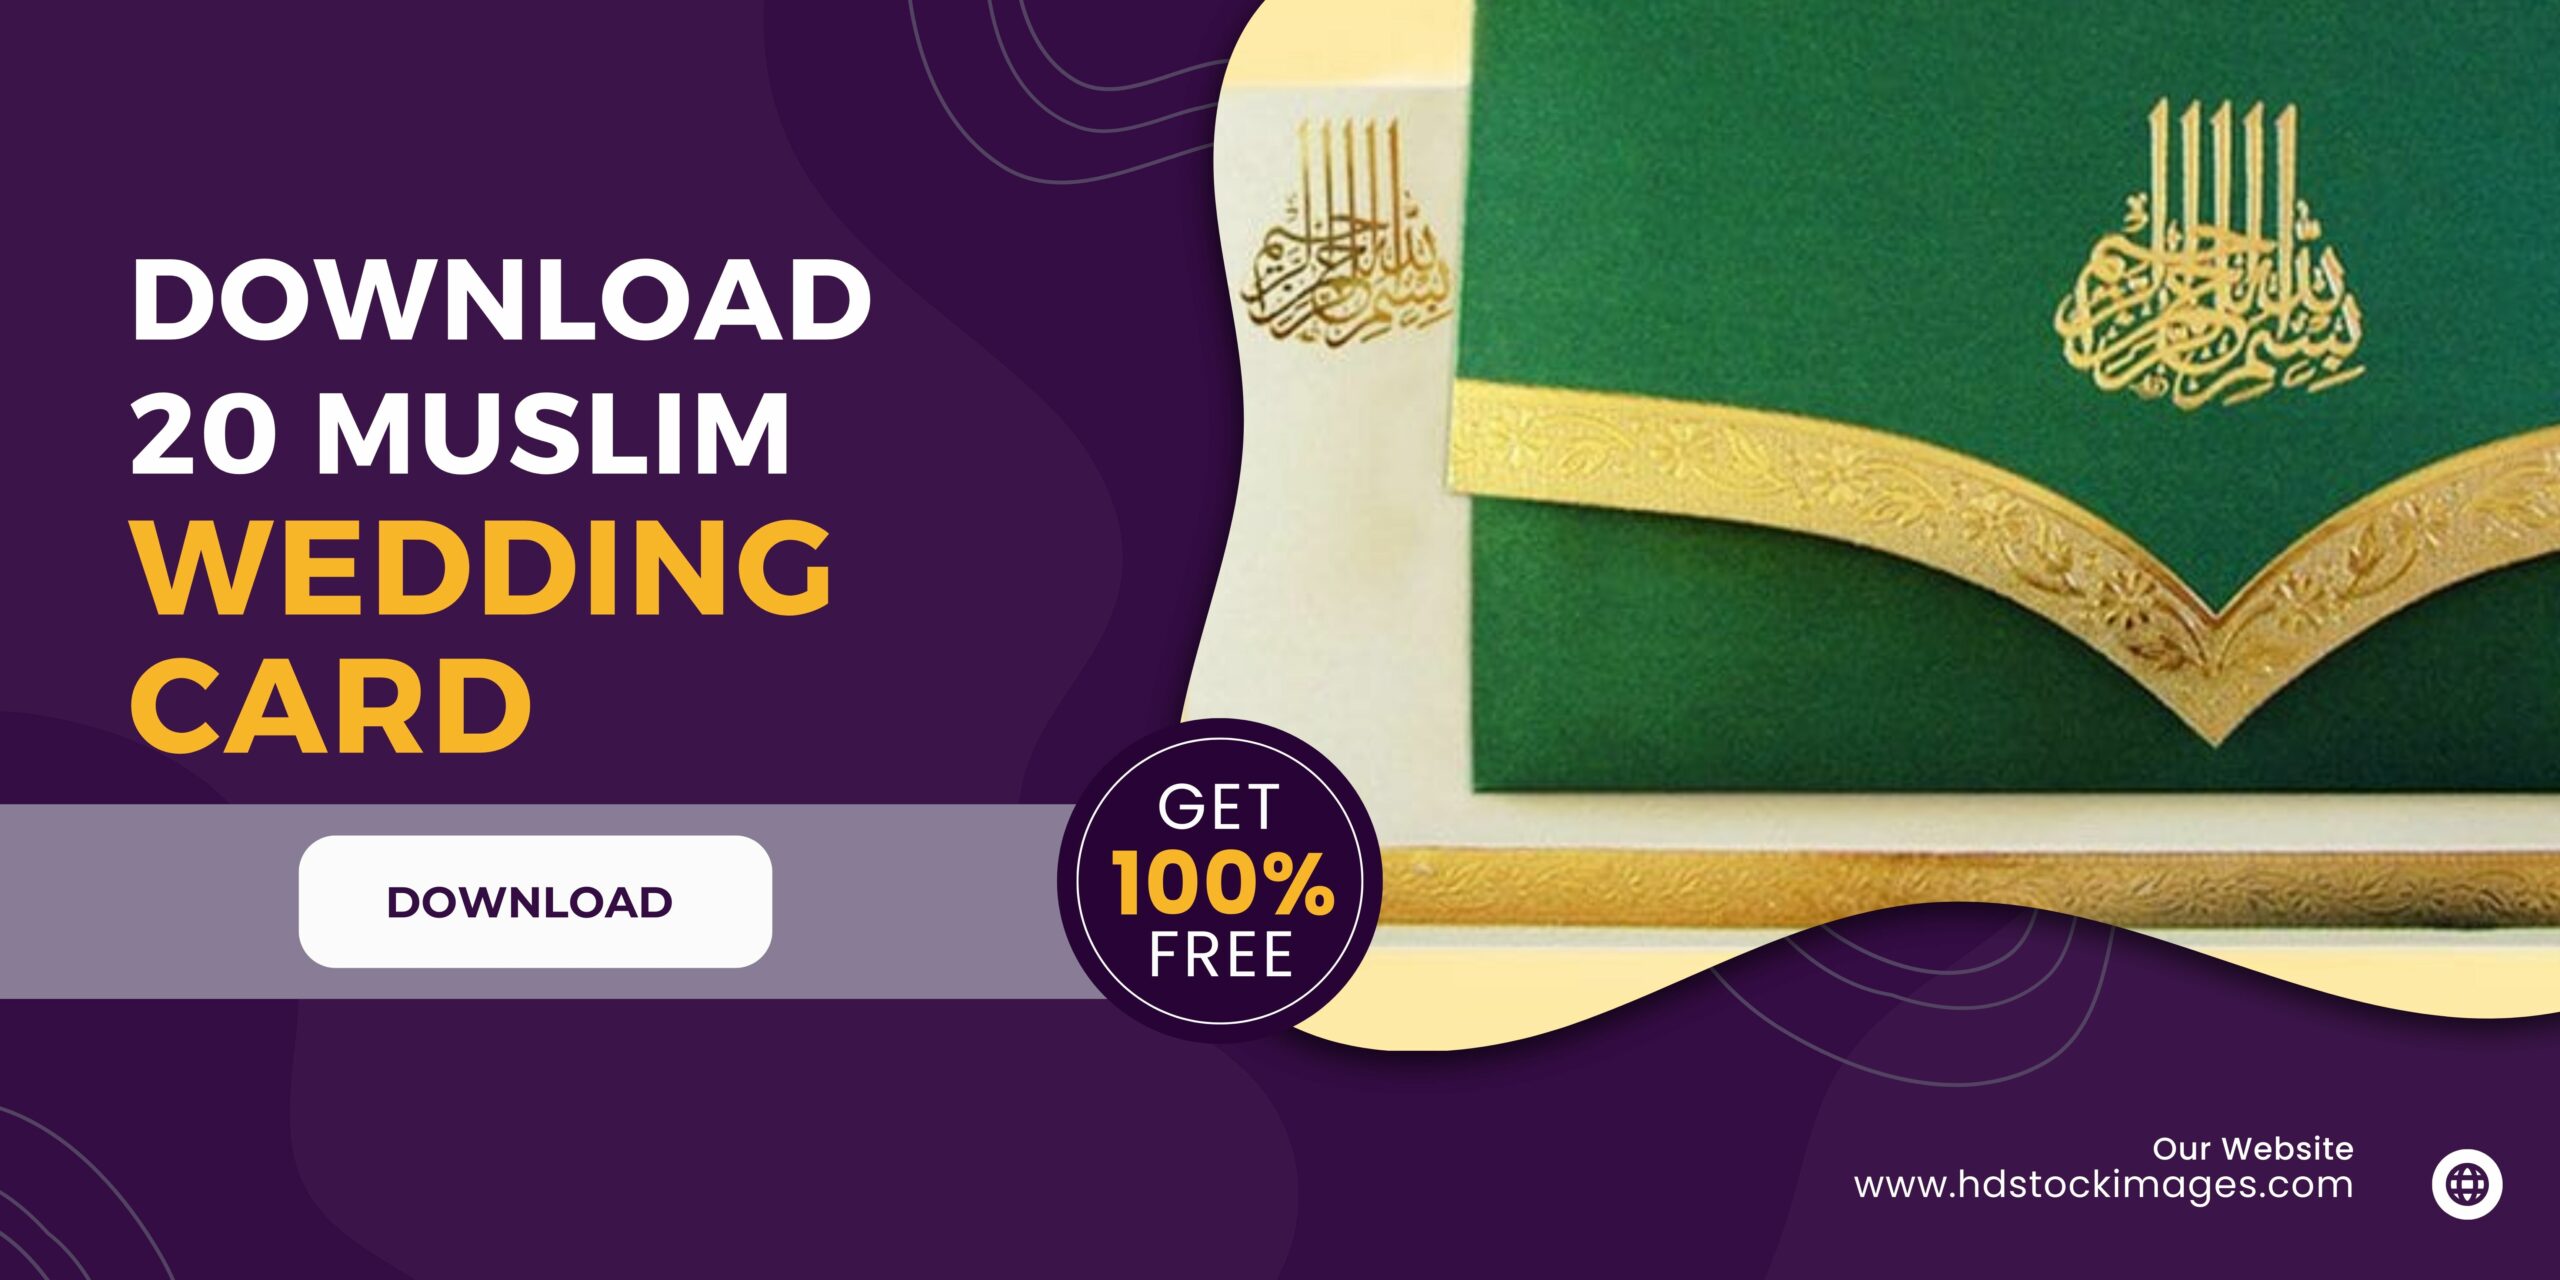 Download 20 Muslim Wedding Card for Free